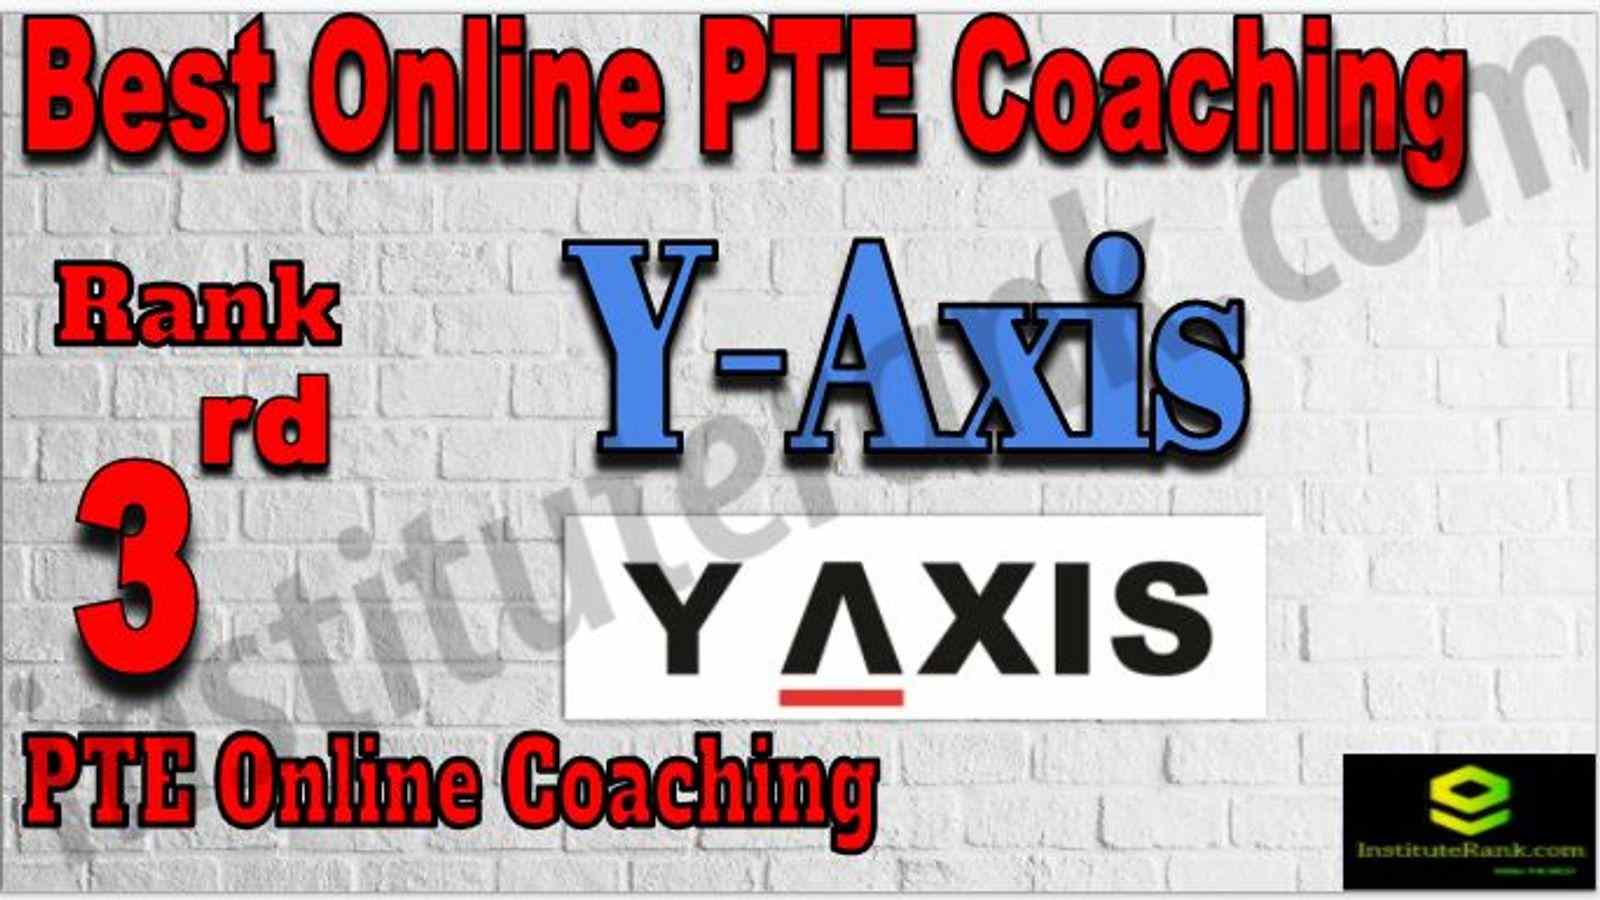 Rank 3 Best Online PTE Coaching